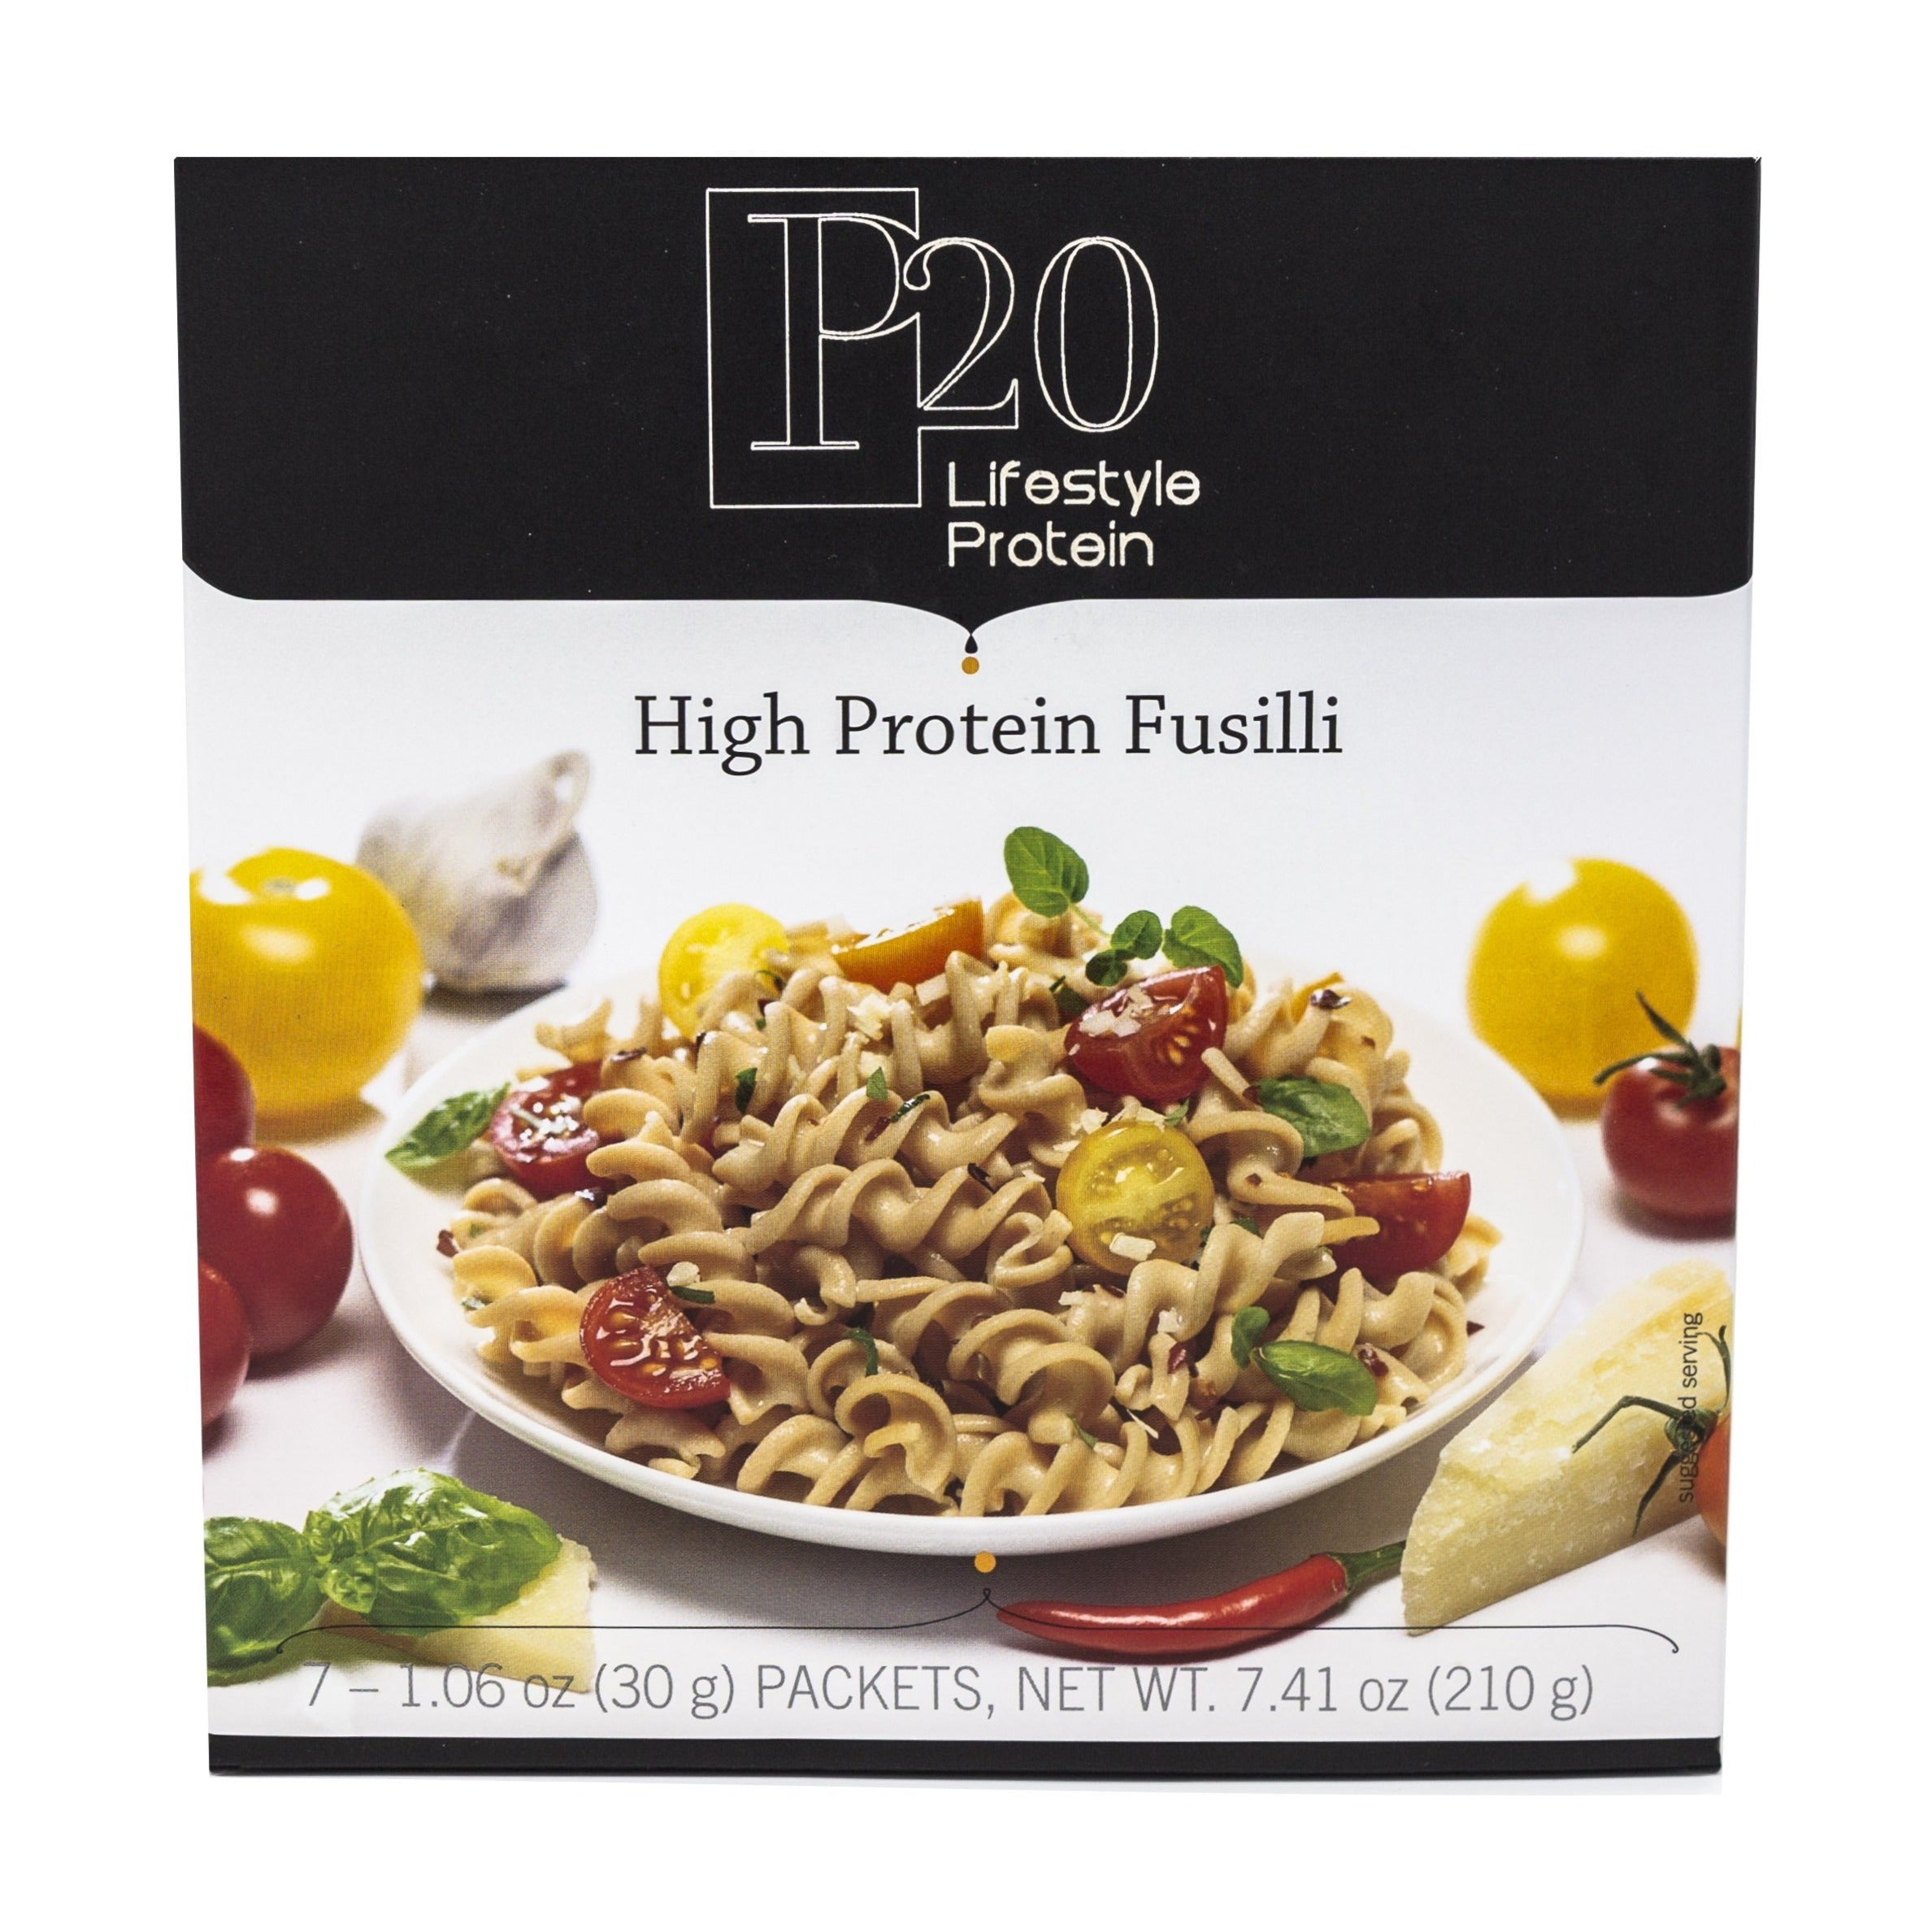 P20 Lifestyle Protein Fusilli Pasta